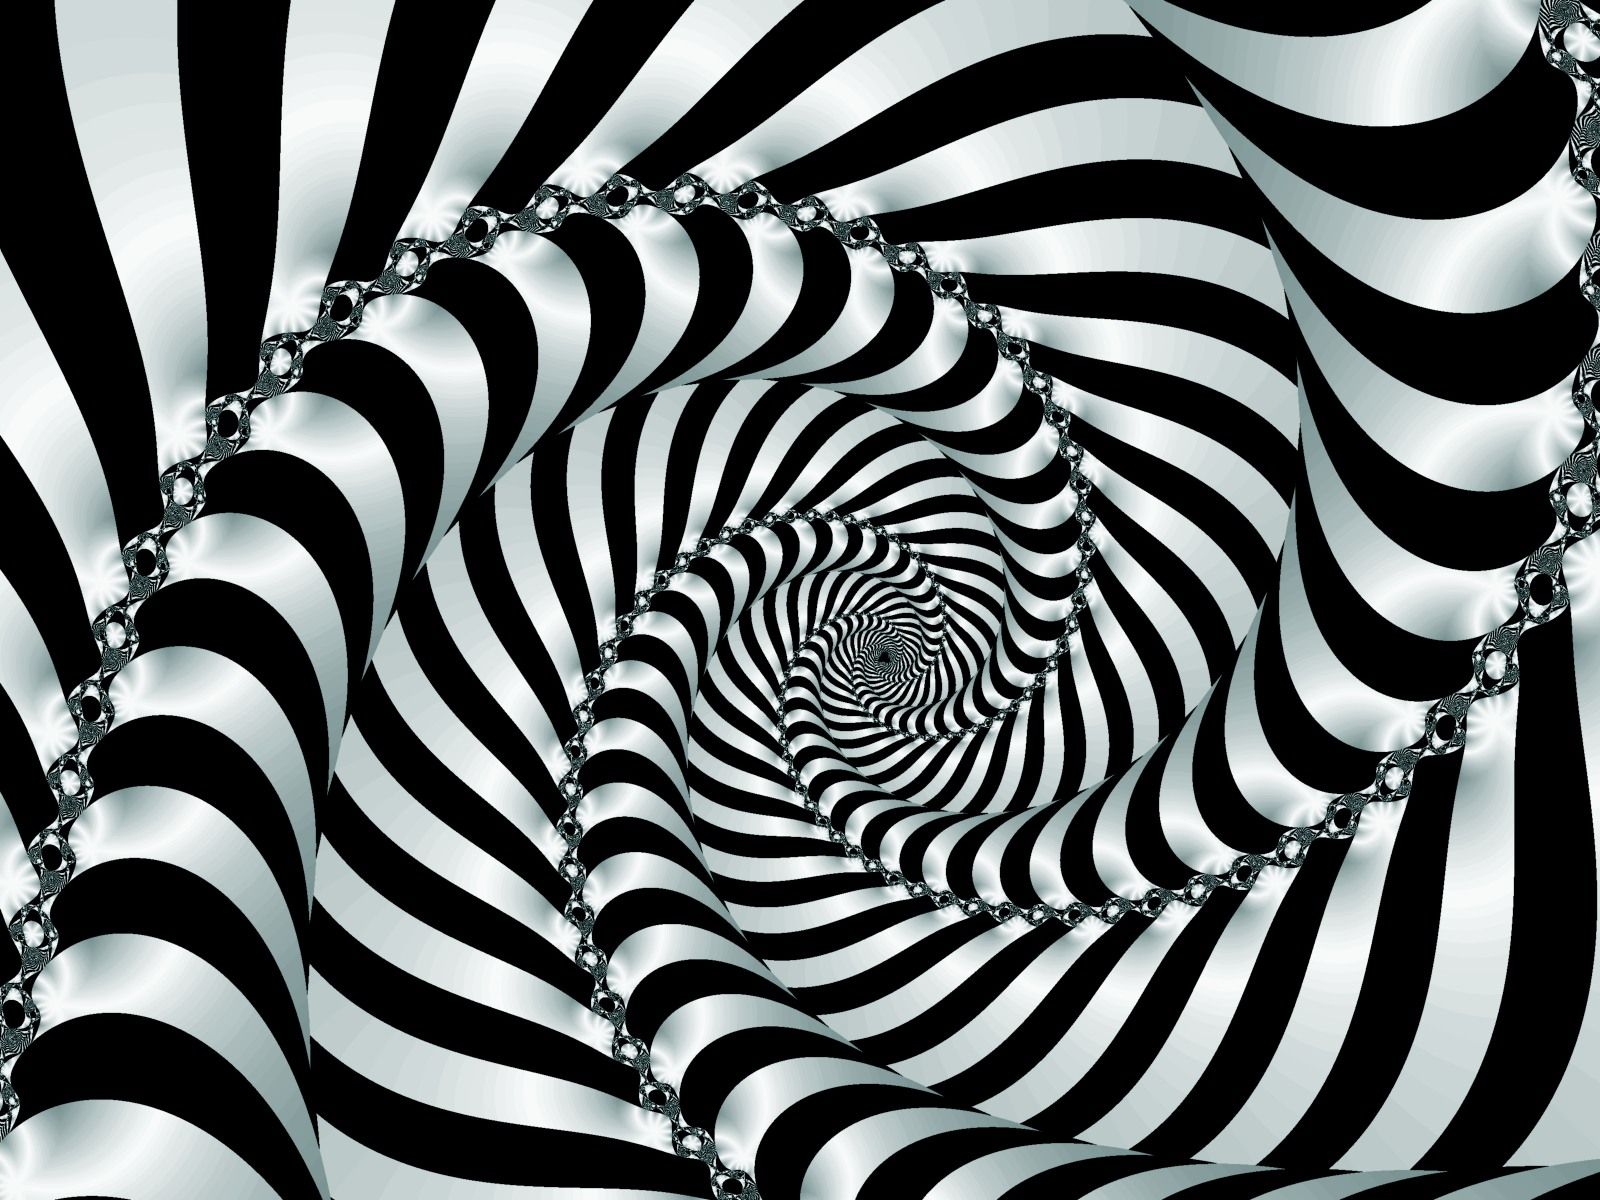 illusion  Optical illusion wallpaper Optical illusion images Optical  illusions